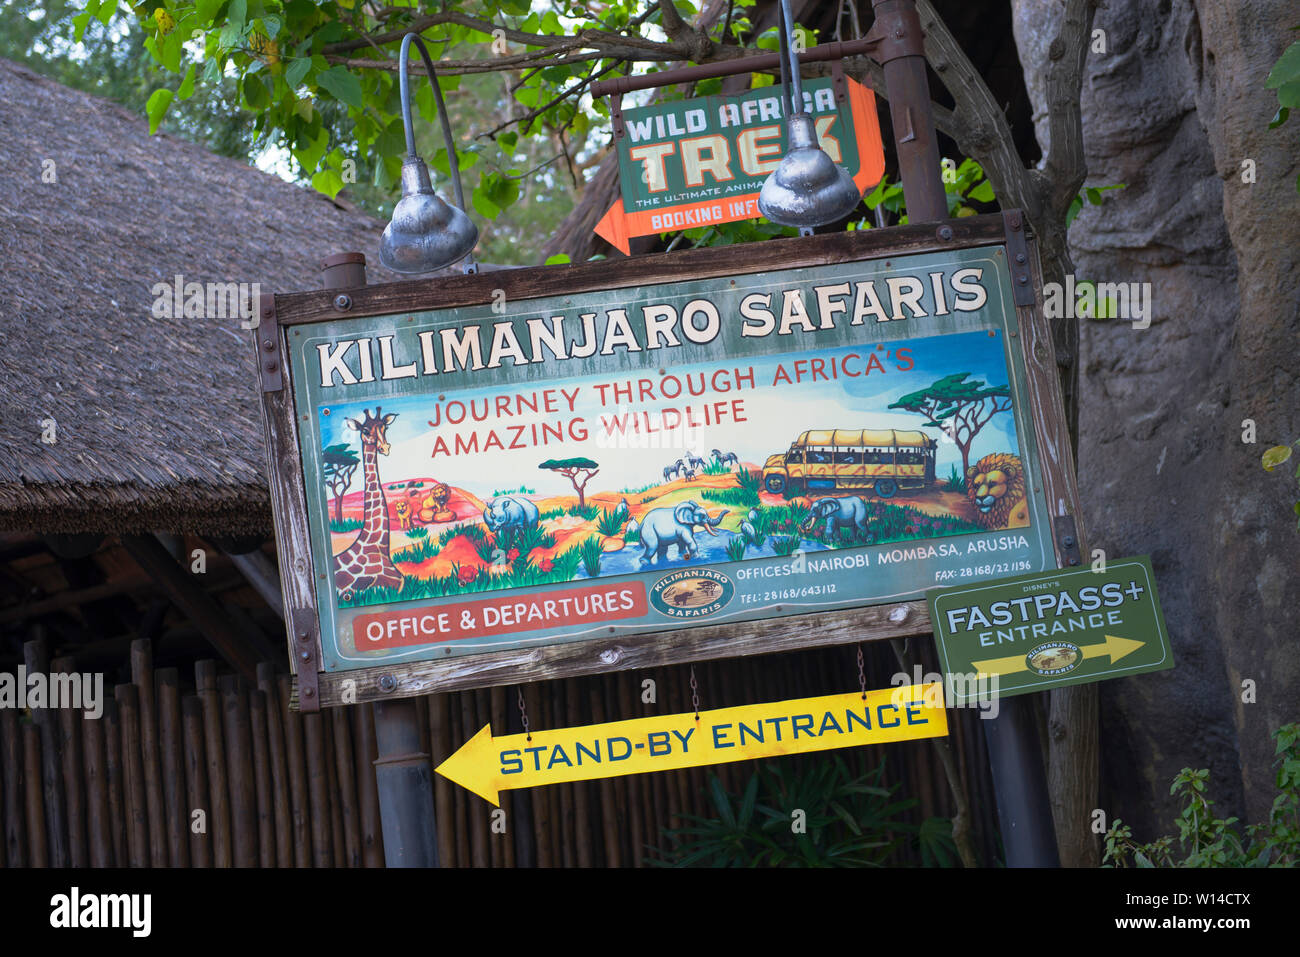 Disney Animal Kingdom, Kilimanjaro Safaris Sign, directions to Entrance Stand-by and FastPass, Disney World, Florida, Orlando, USA Stock Photo